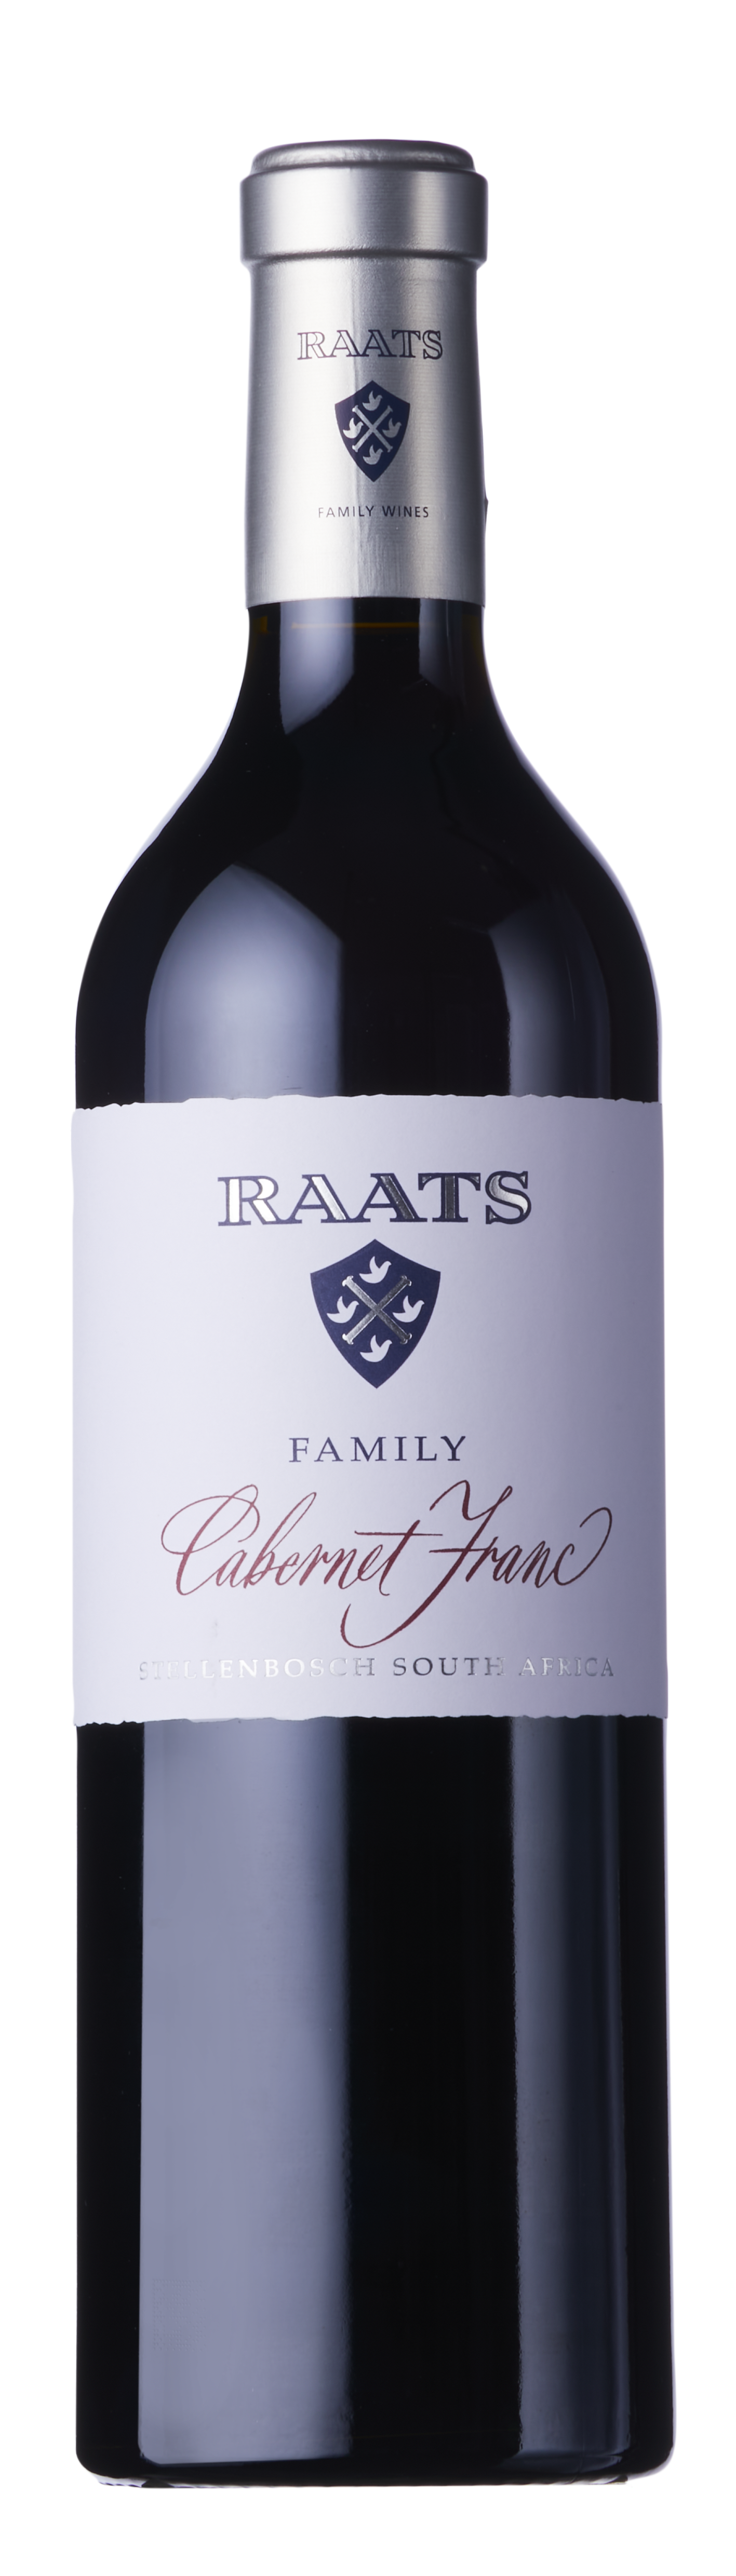 Bottle shot - Raats Family Wines, Cabernet Franc, Stellenbosch, South Africa